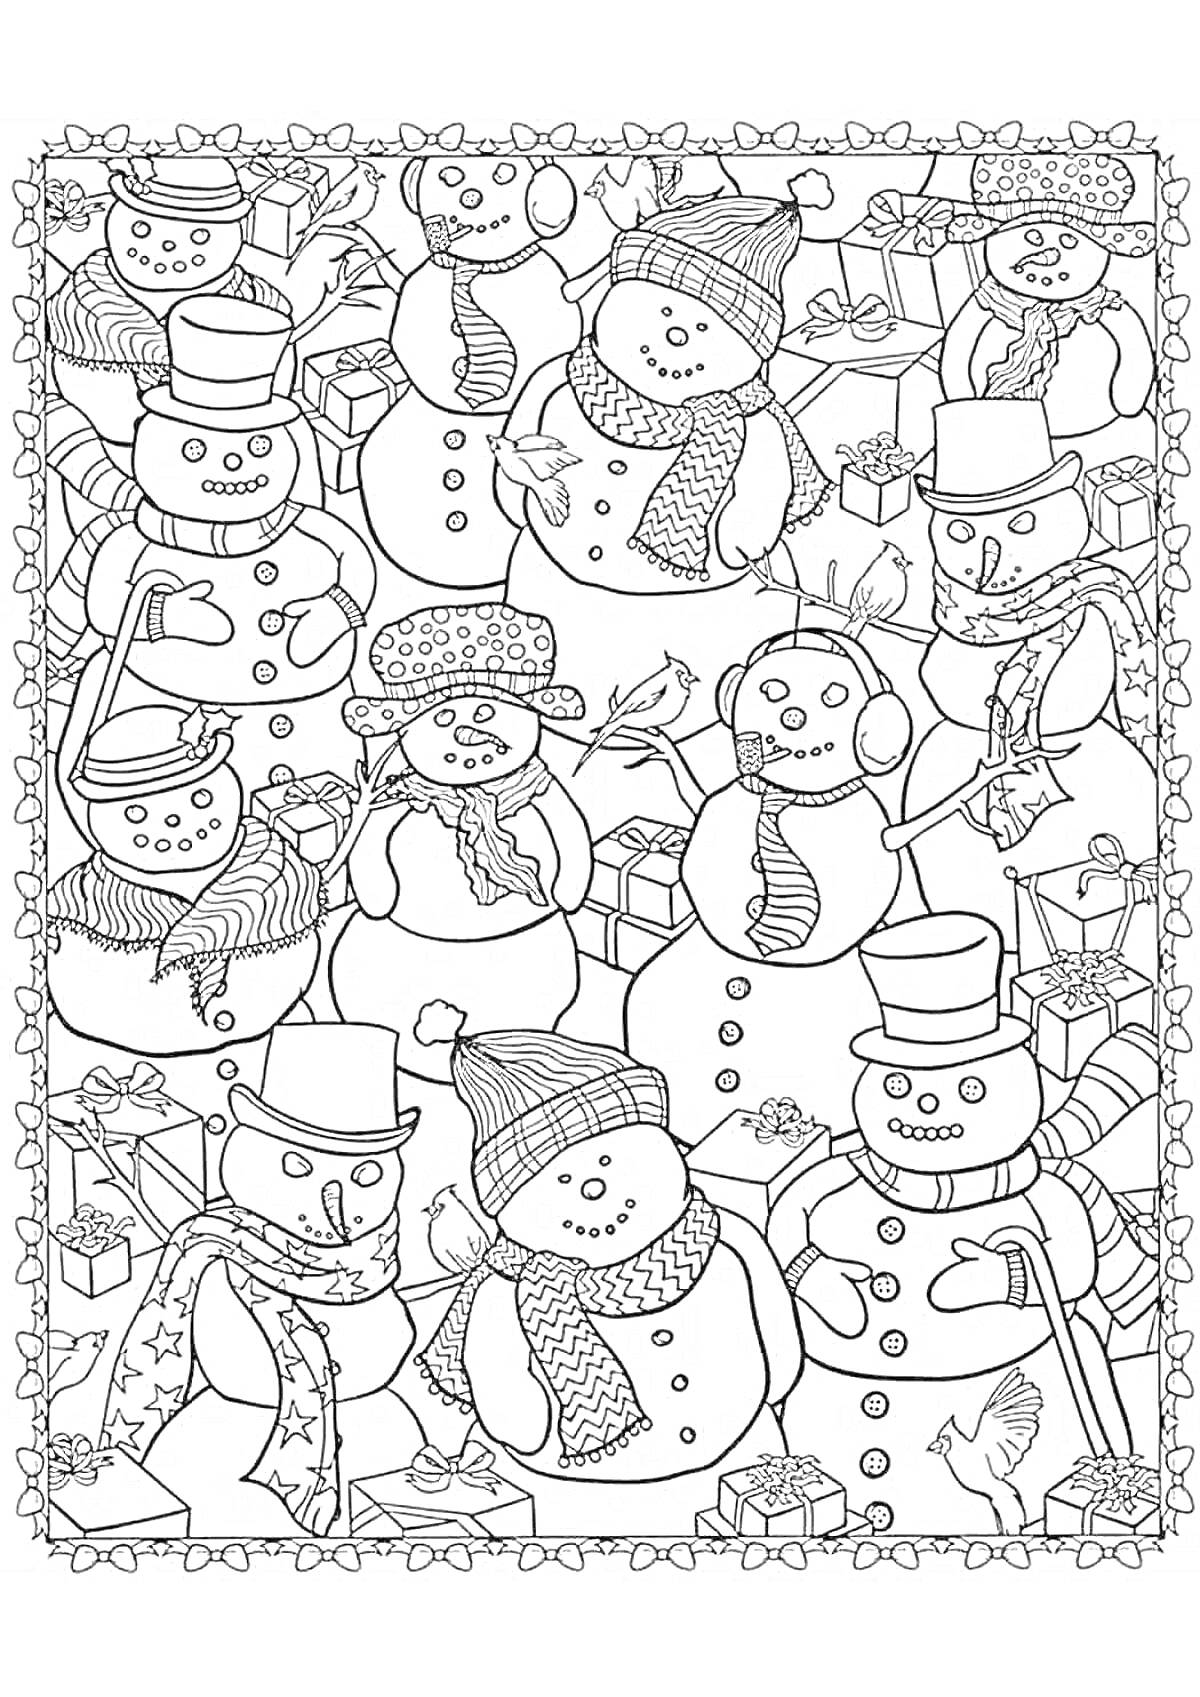 Раскраска Снеговики в шарфах и шляпах с подарками и птицами